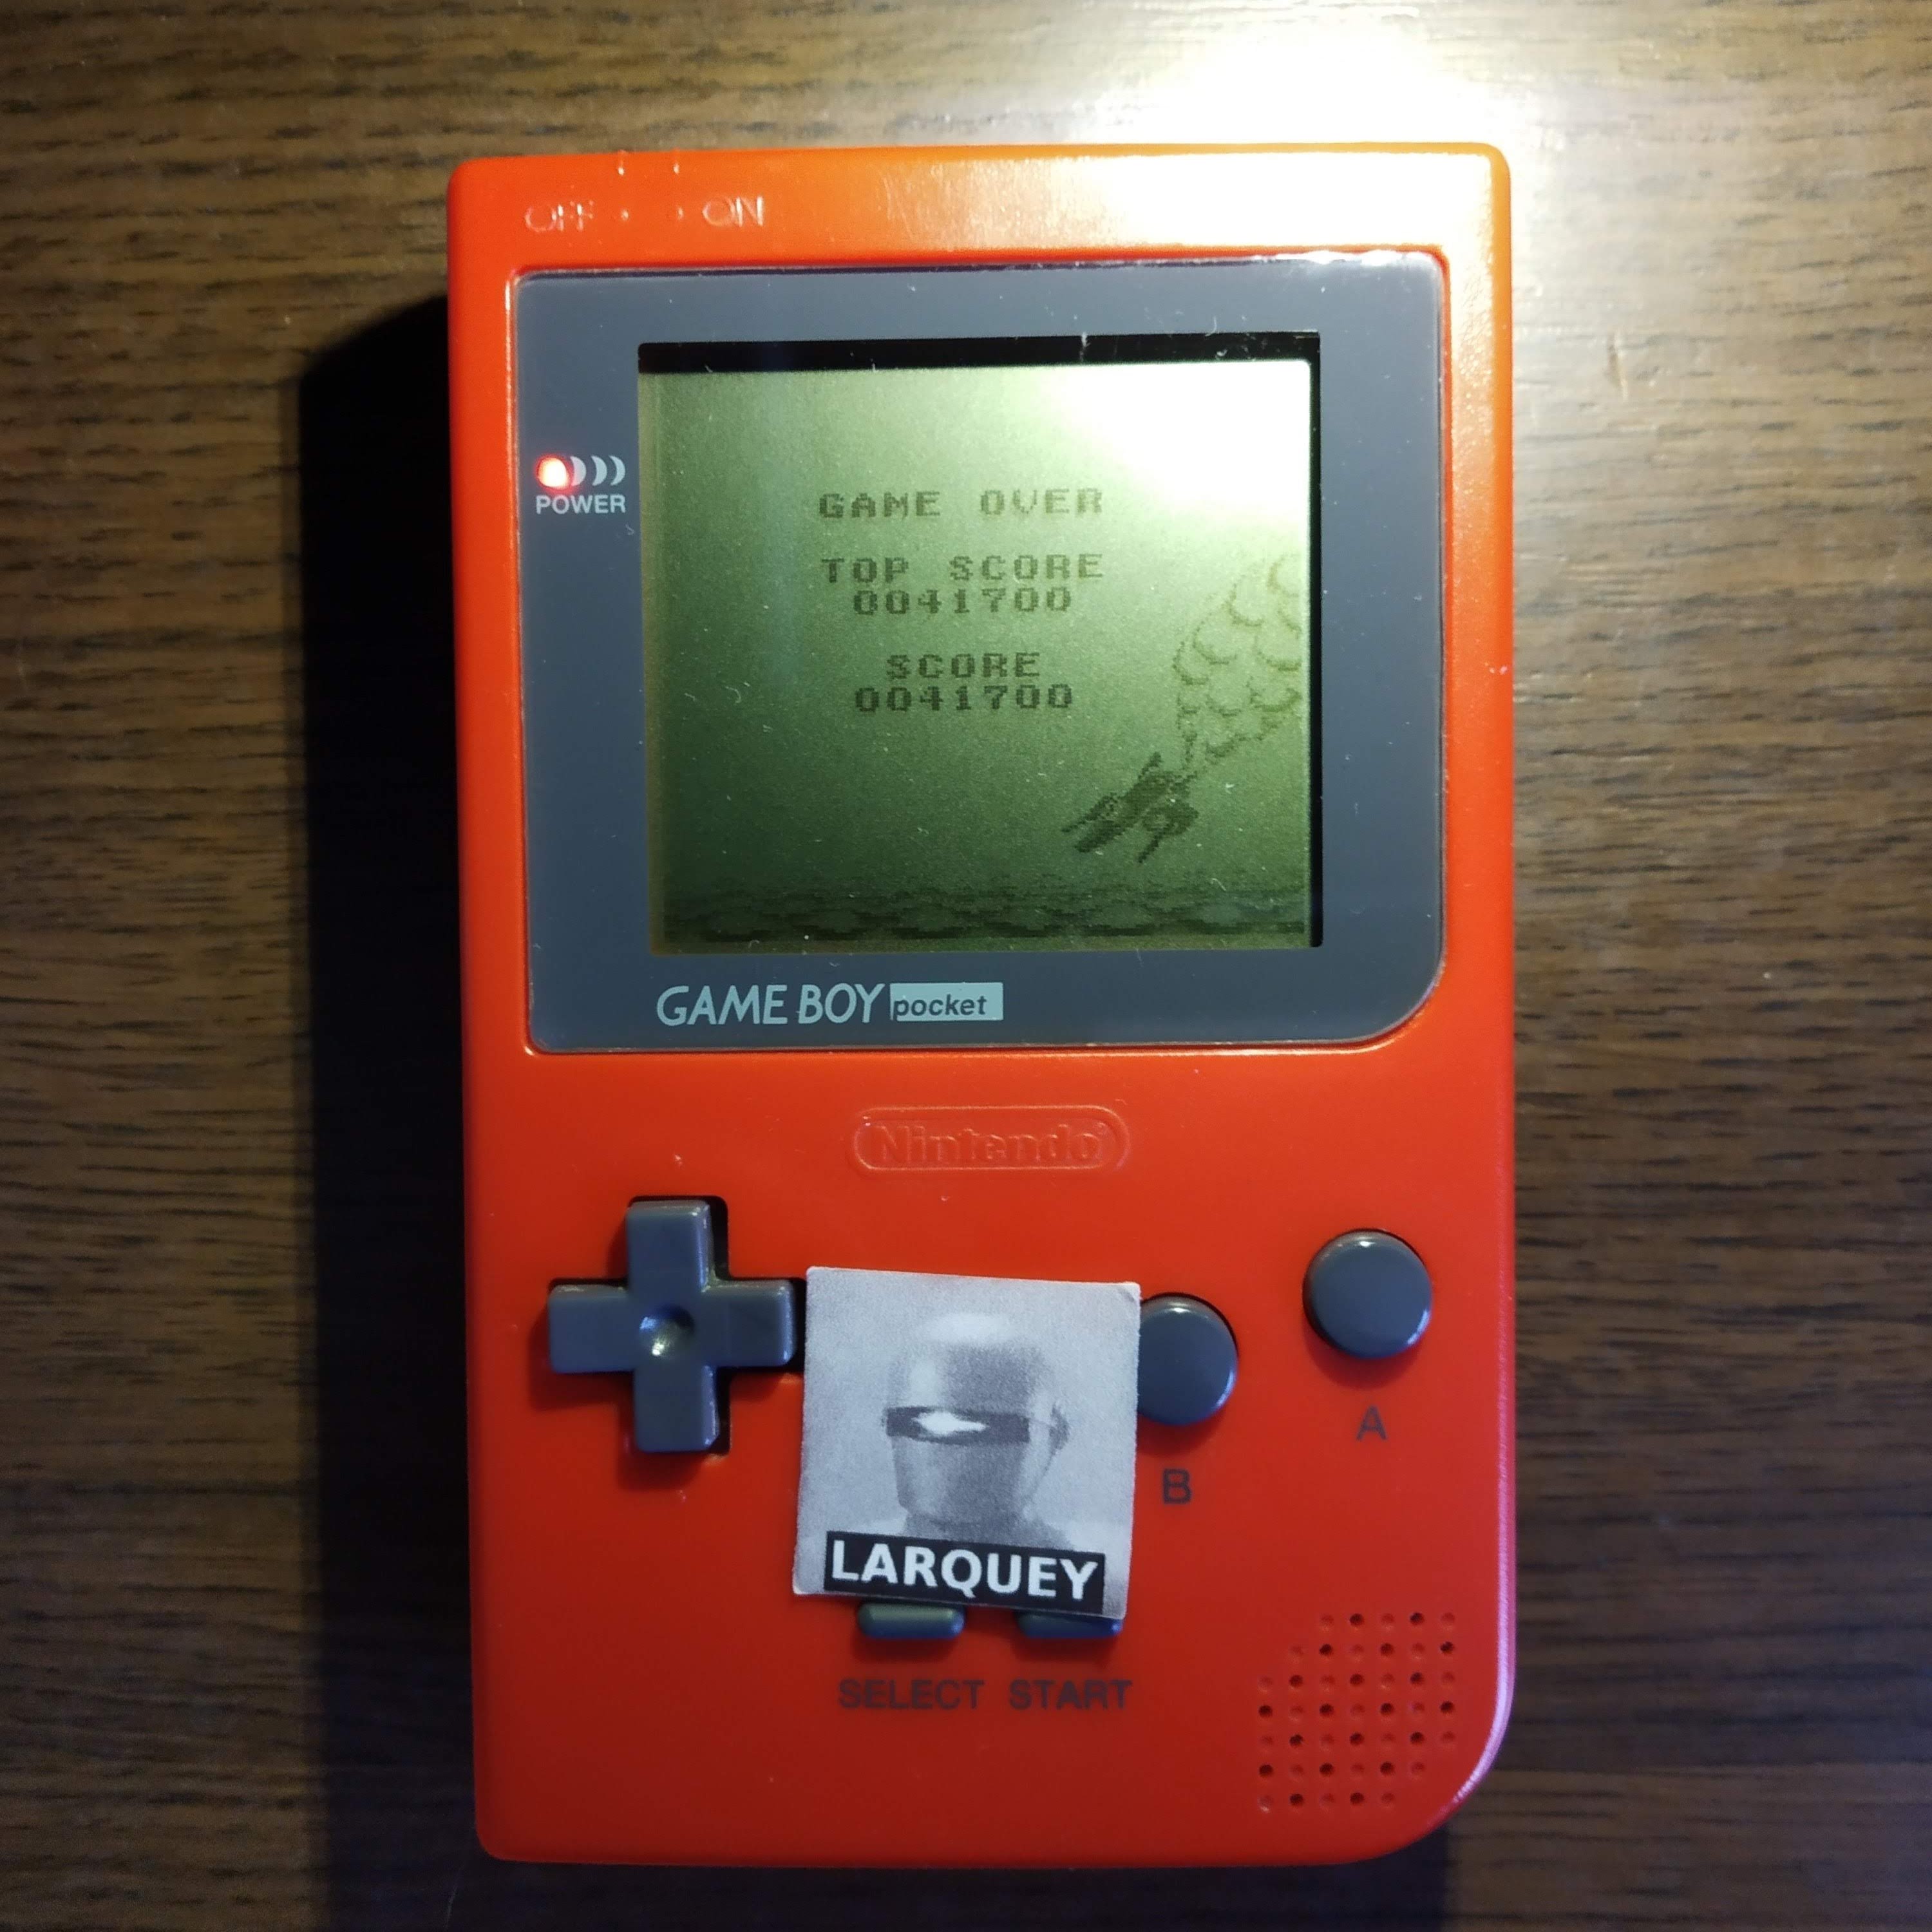 Larquey: Solar Striker (Game Boy) 41,700 points on 2020-05-03 07:03:50